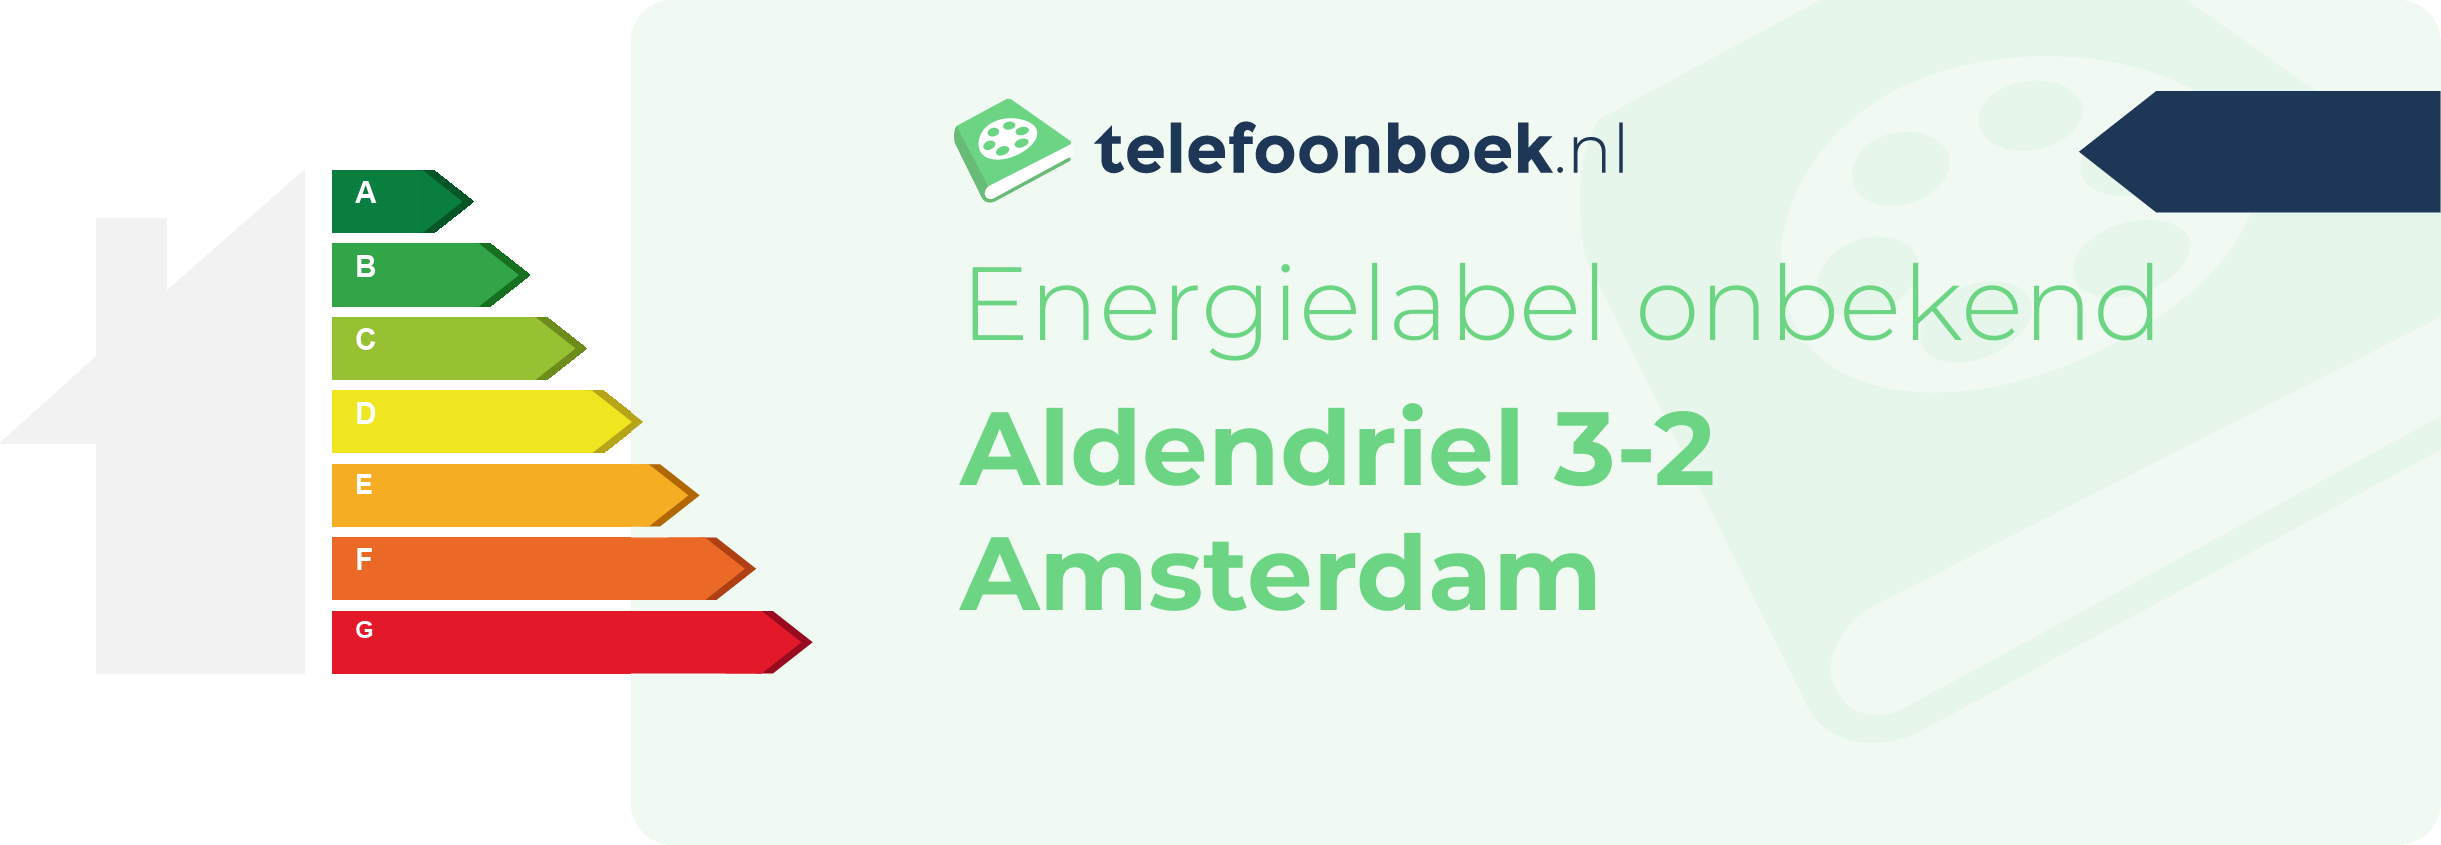 Energielabel Aldendriel 3-2 Amsterdam